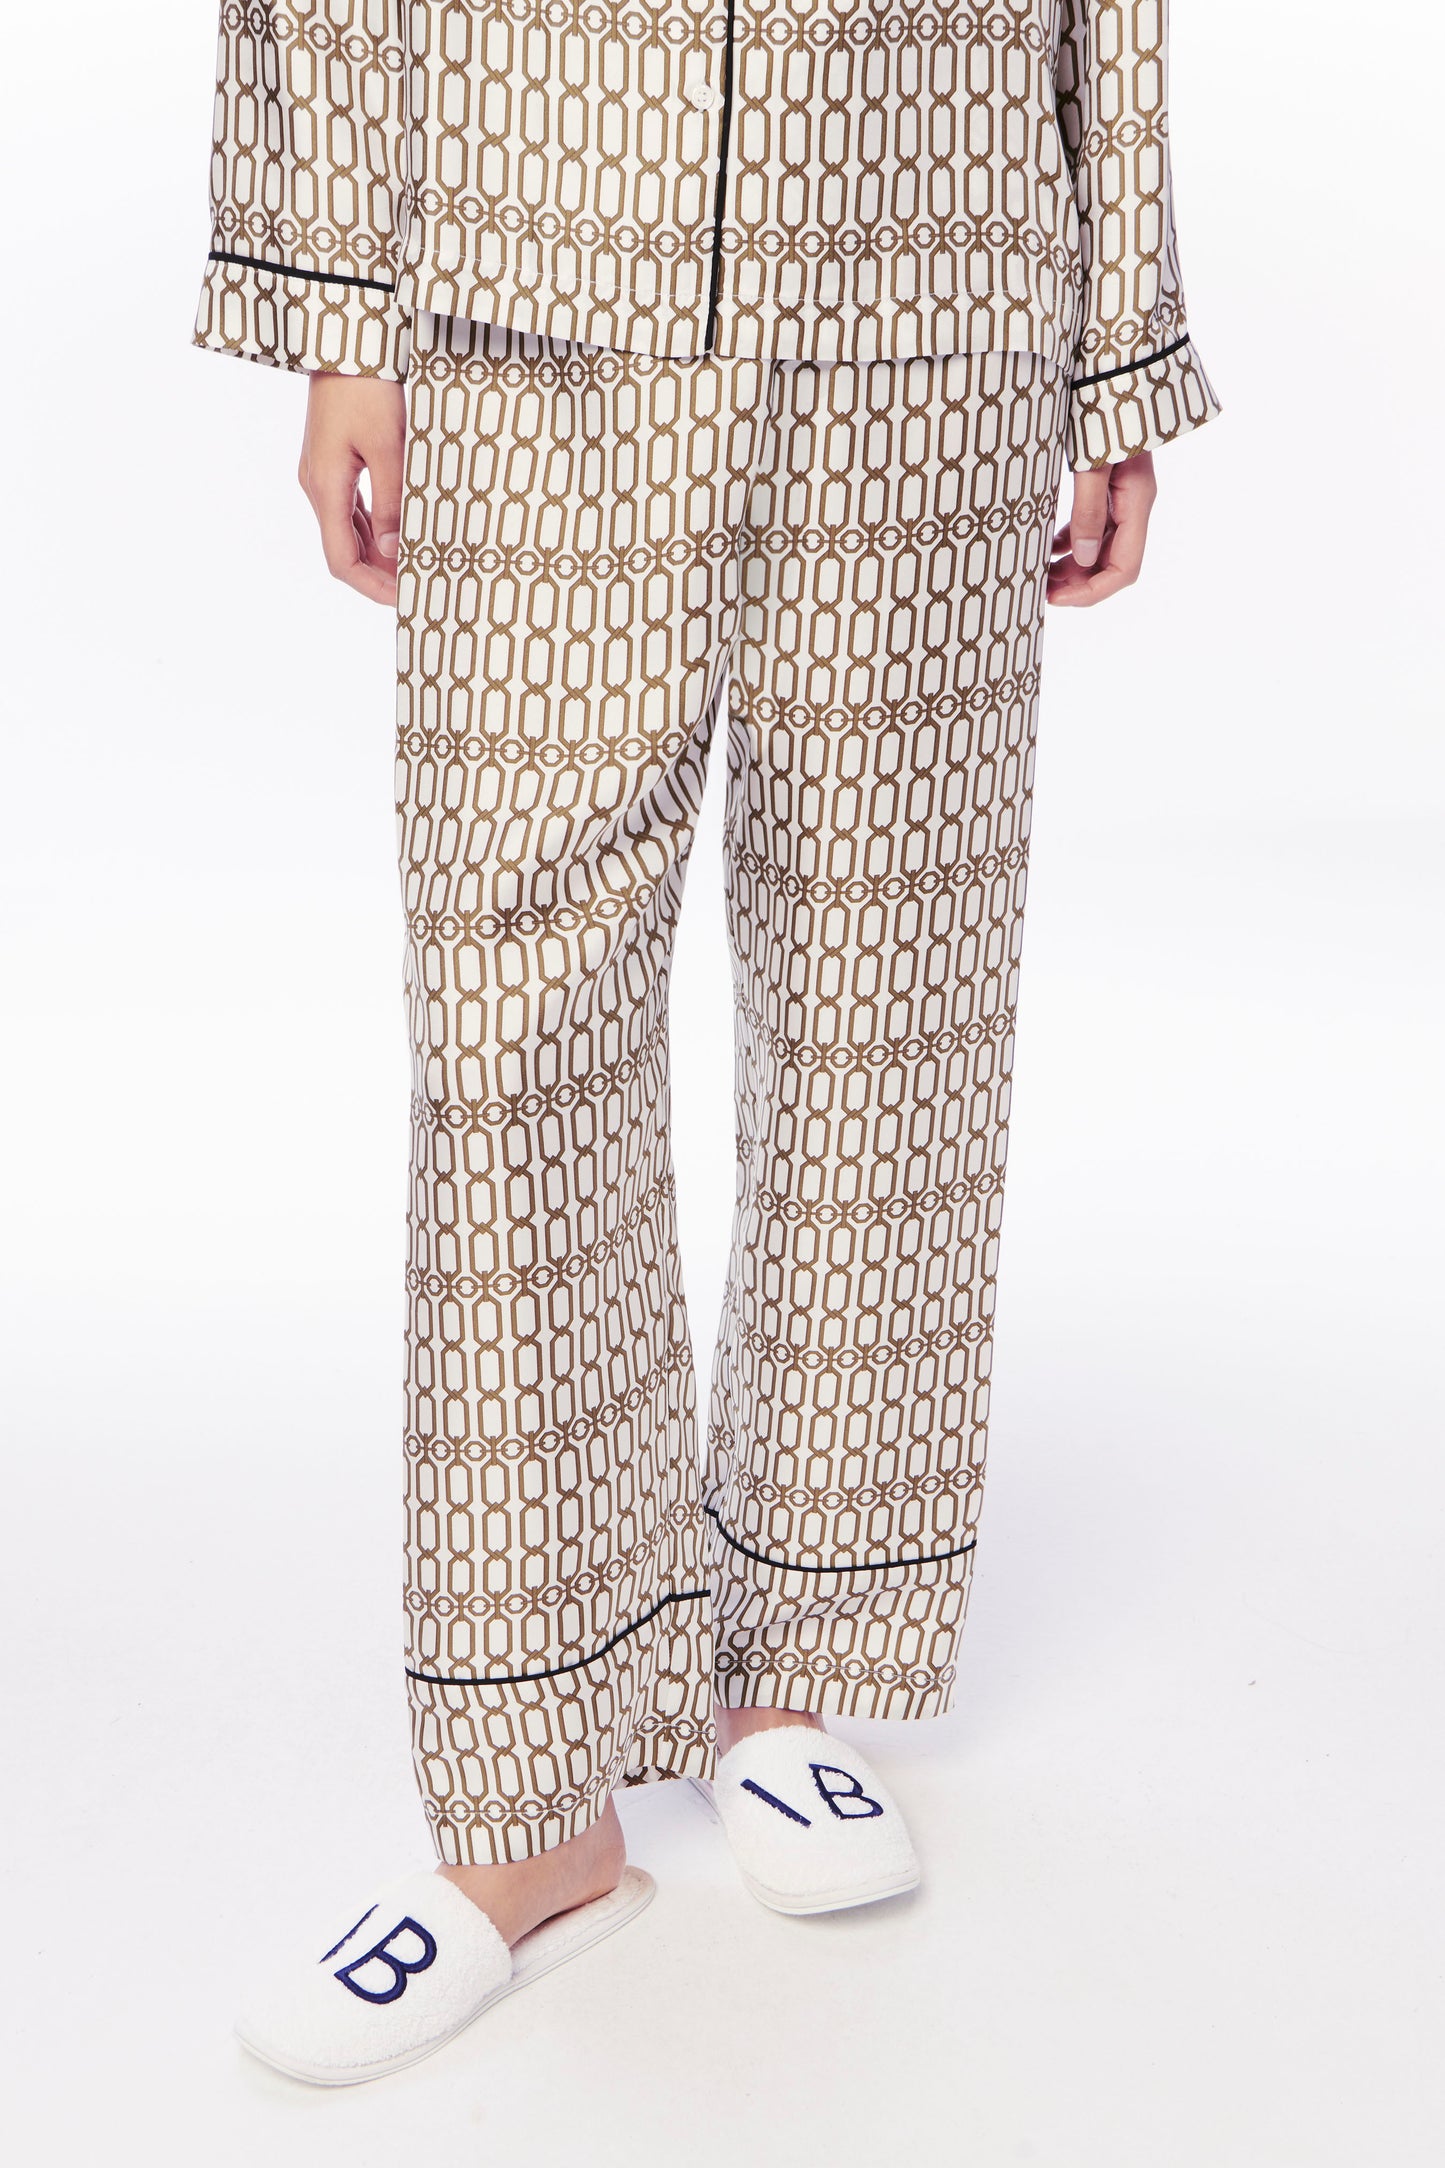 Louis Vuitton Print Pajamas For Women's